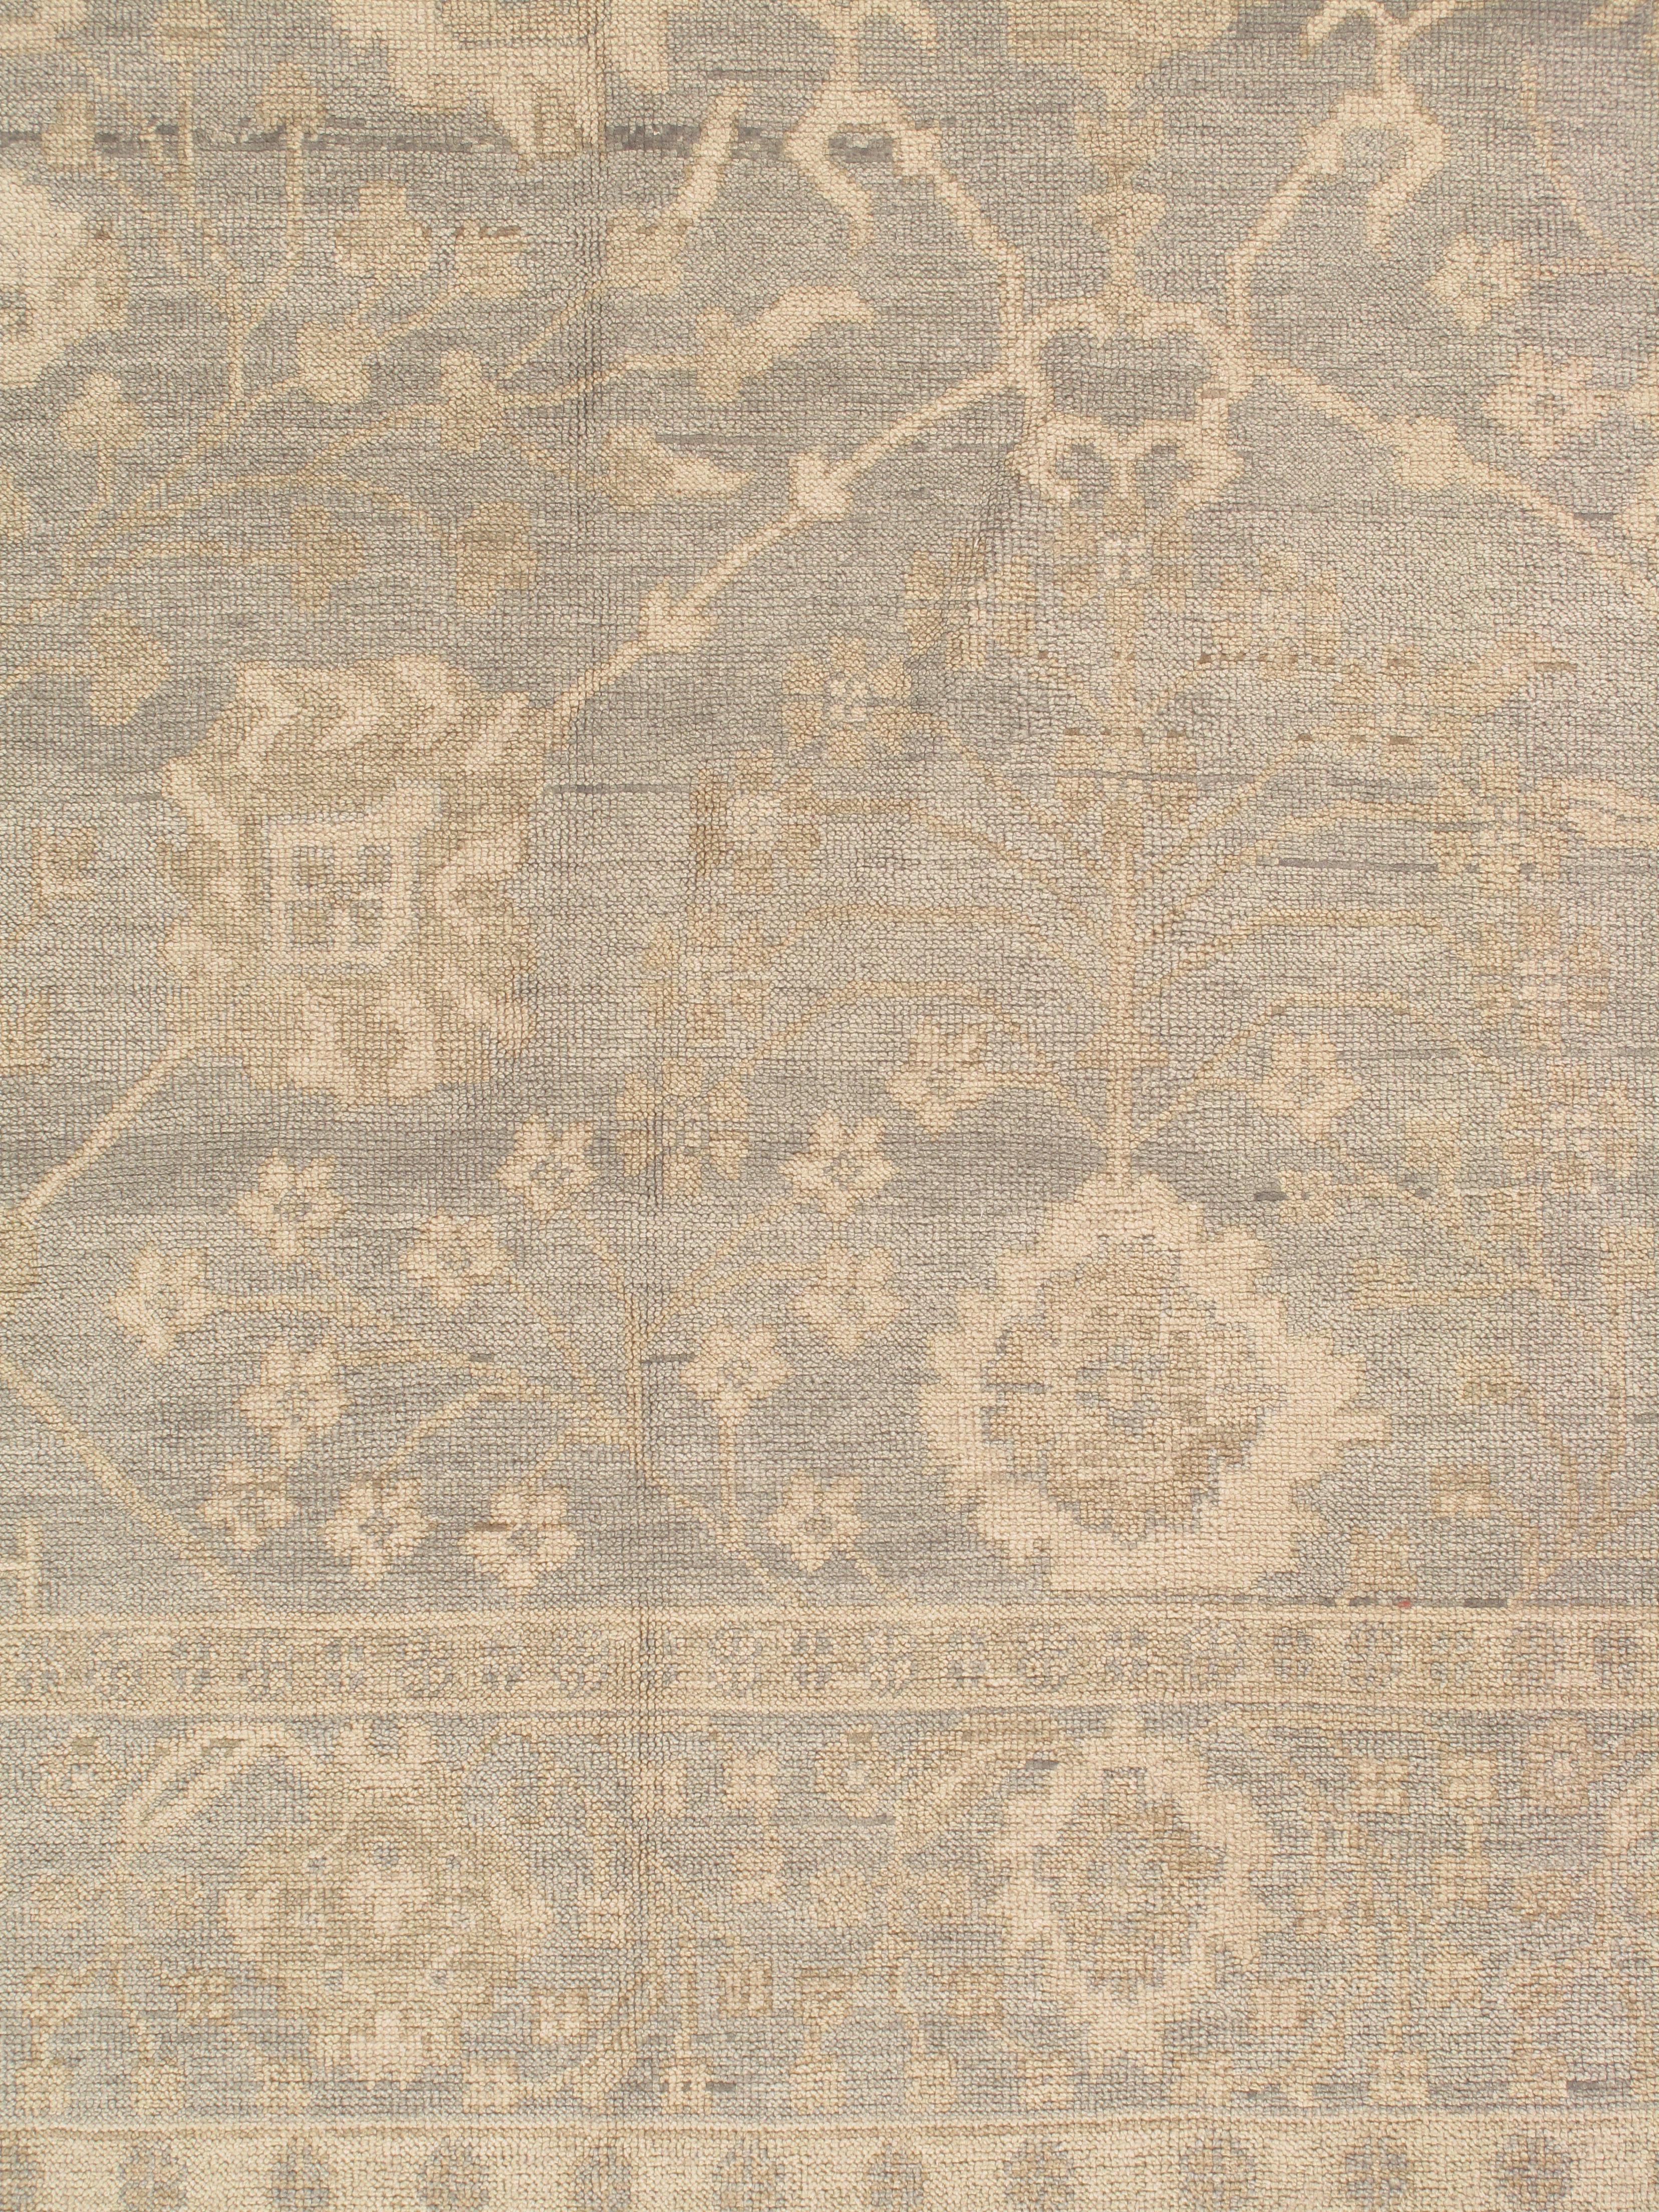 Contemporary Vintage Oushak Carpet, Oriental Rug, Handmade Green Grey, Ivory, Saffron For Sale